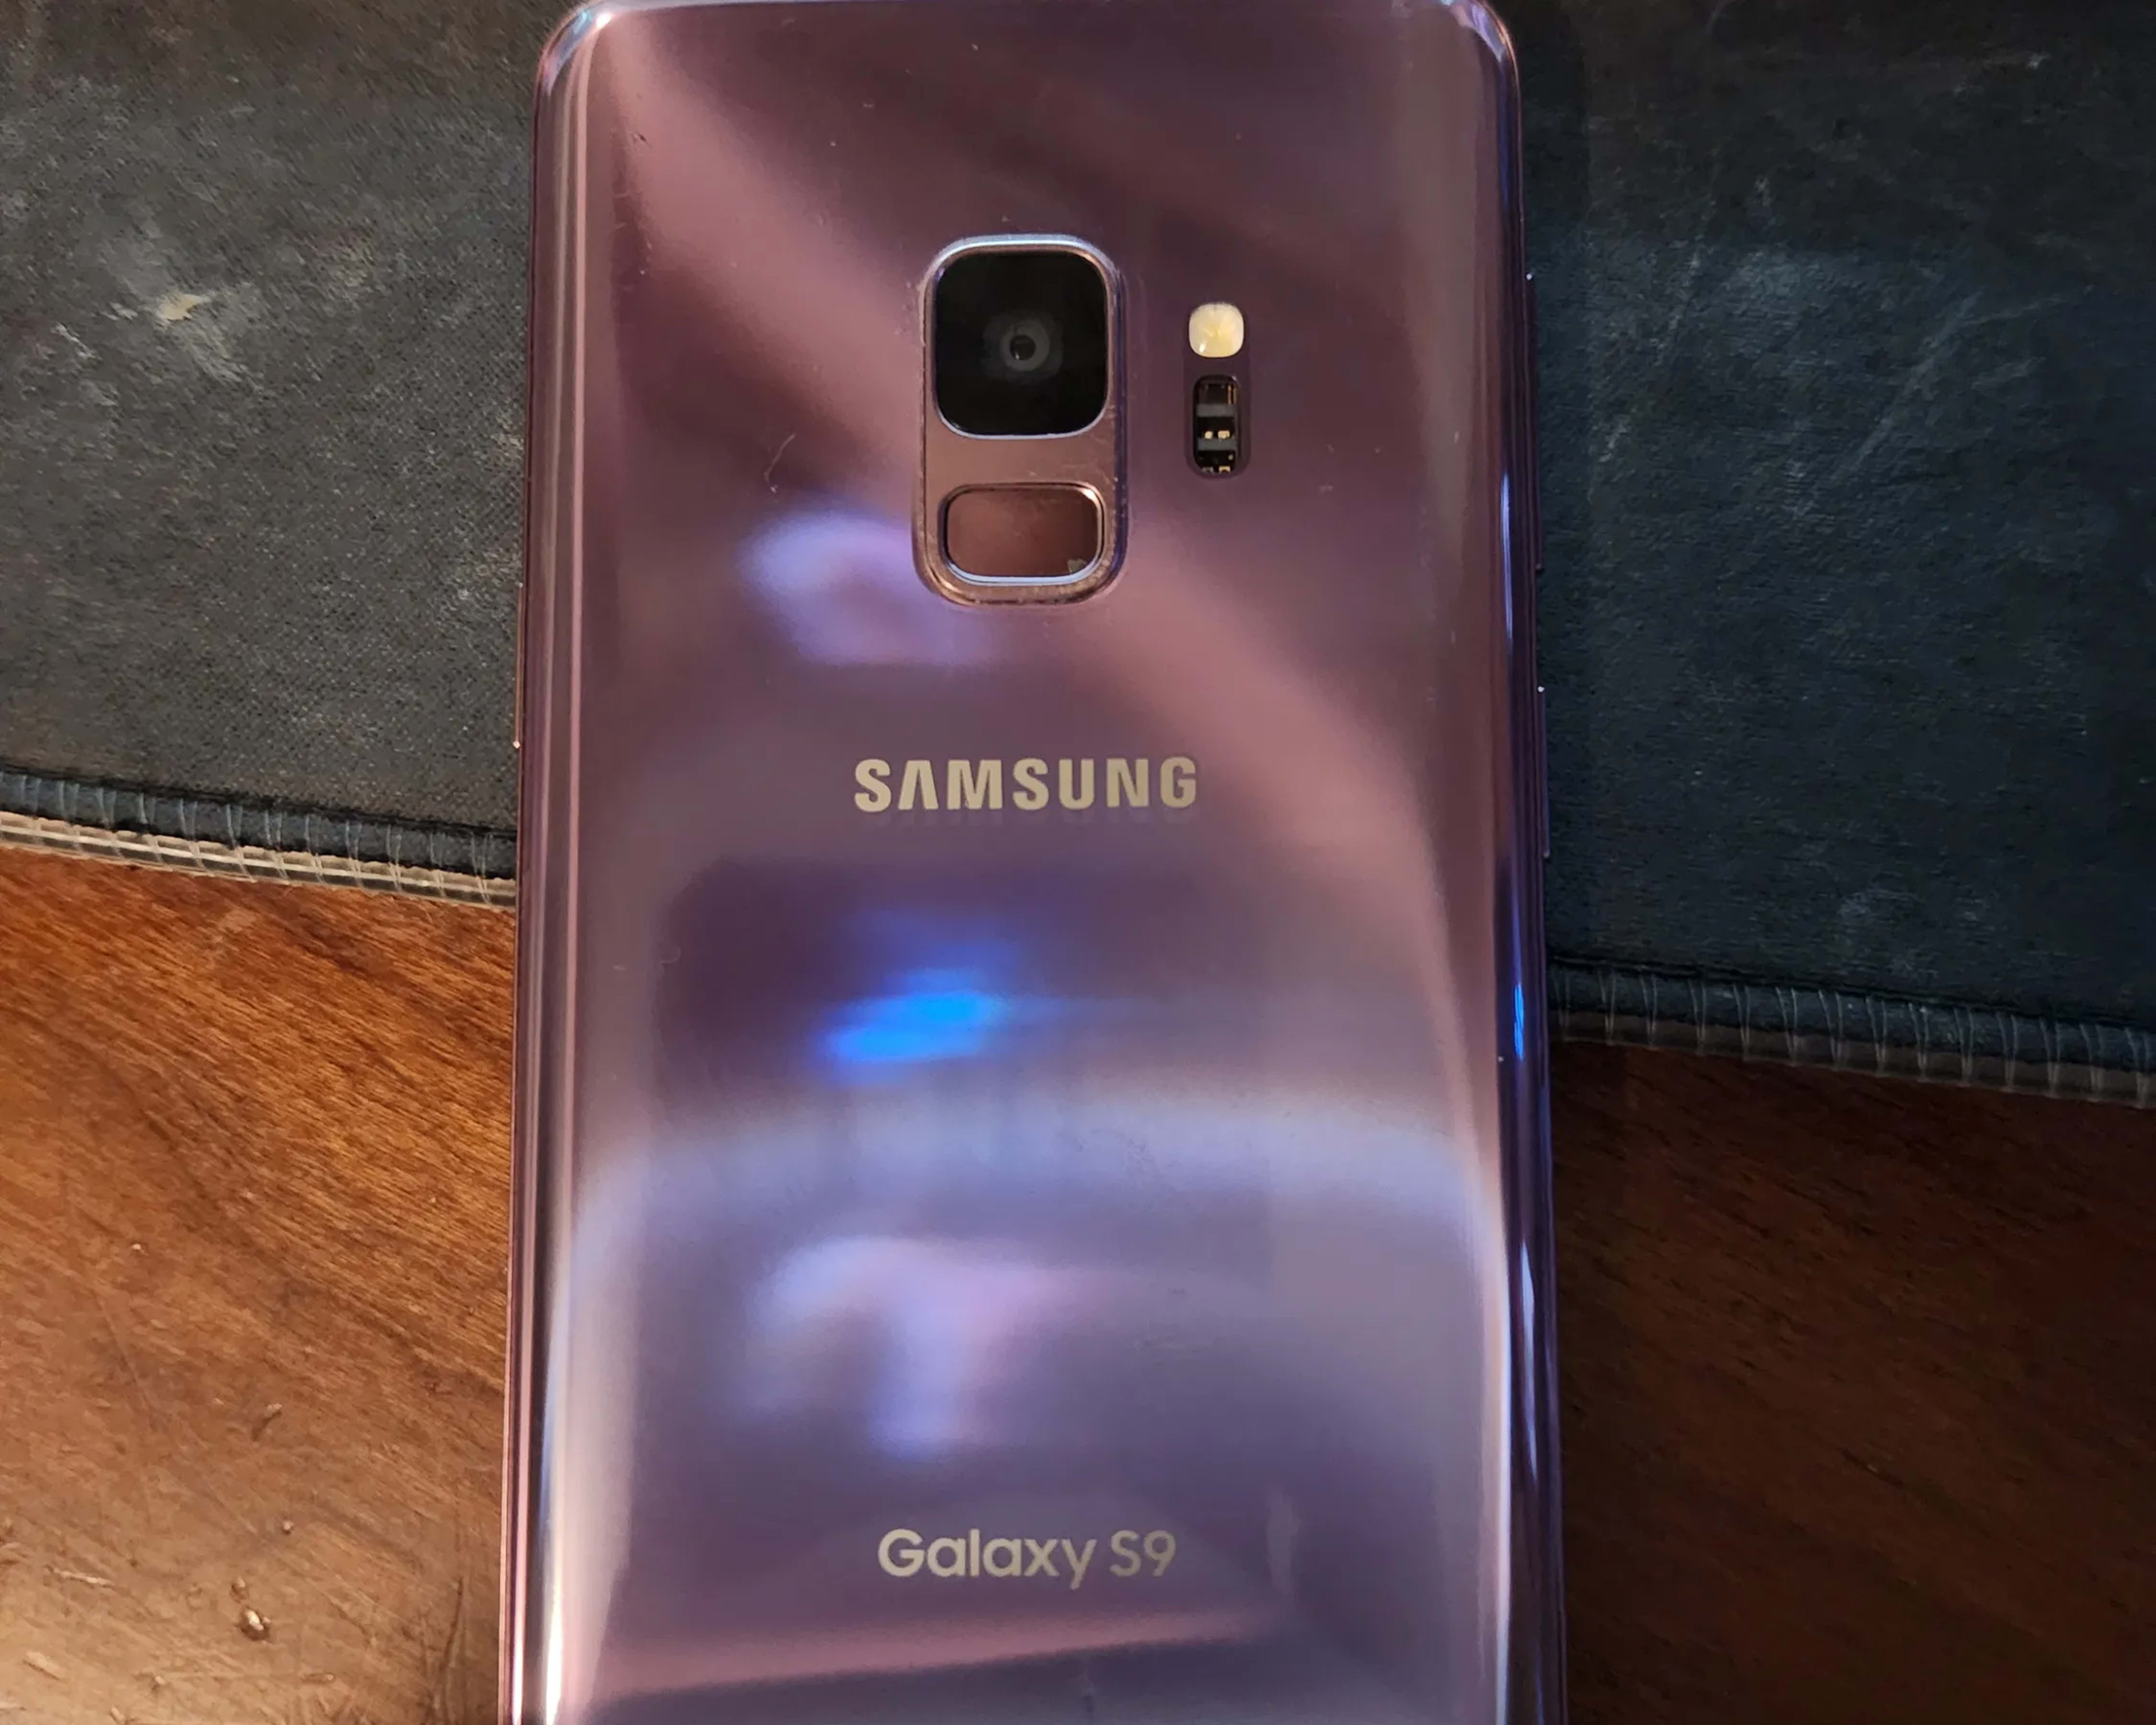 Samsung Galaxy s9 unlocked 64gb storage in purple